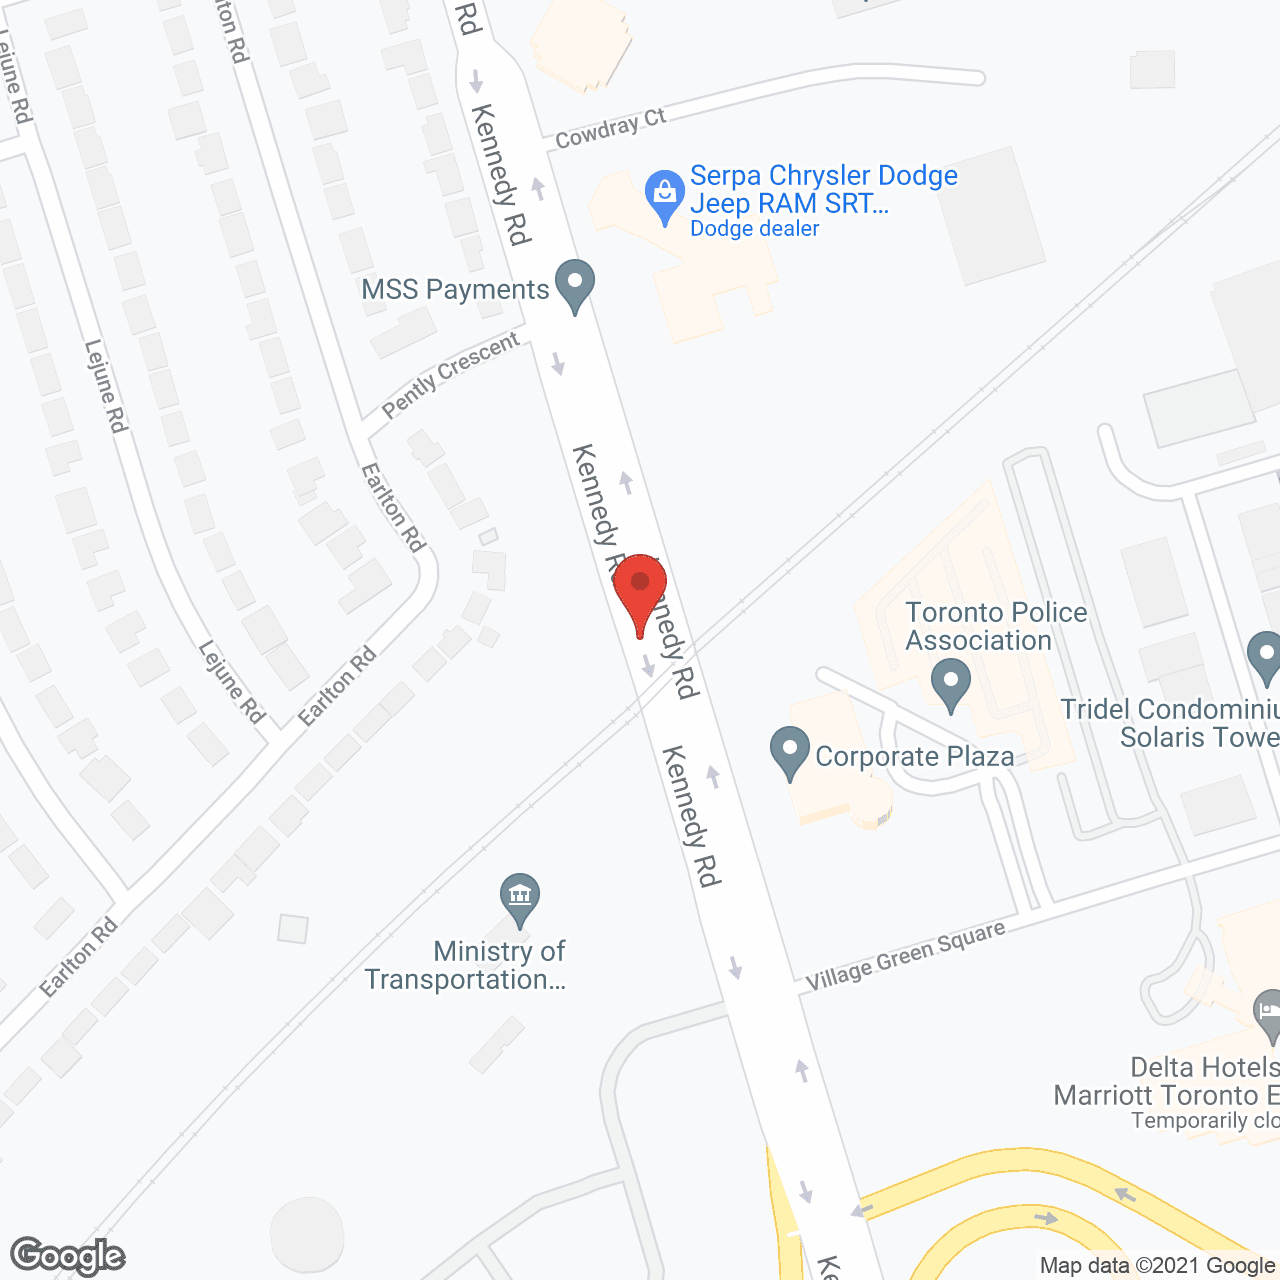 Kennedy Lodge Nursing Home Inc in google map